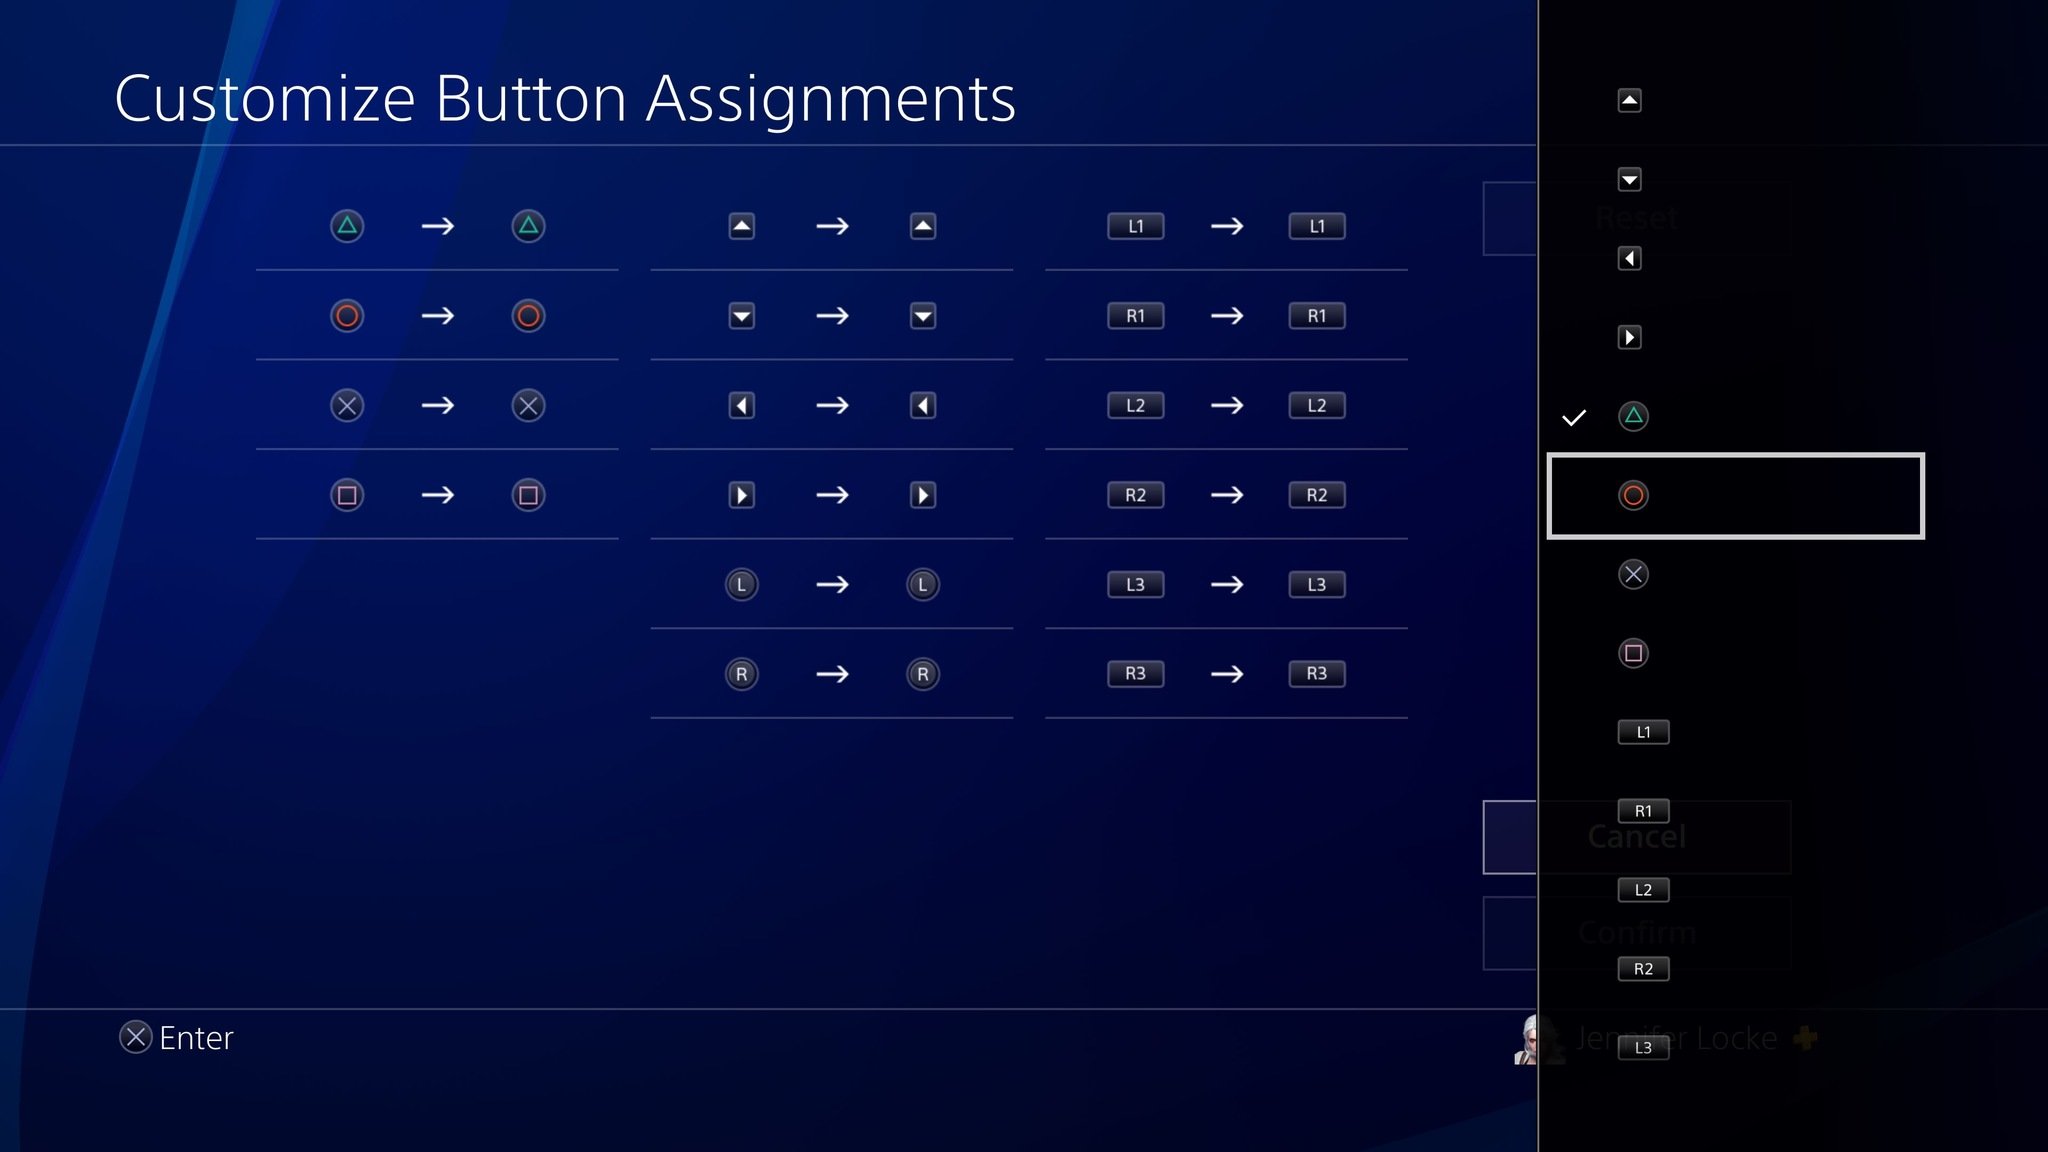 Dualshock 4 Button Remap Assignments